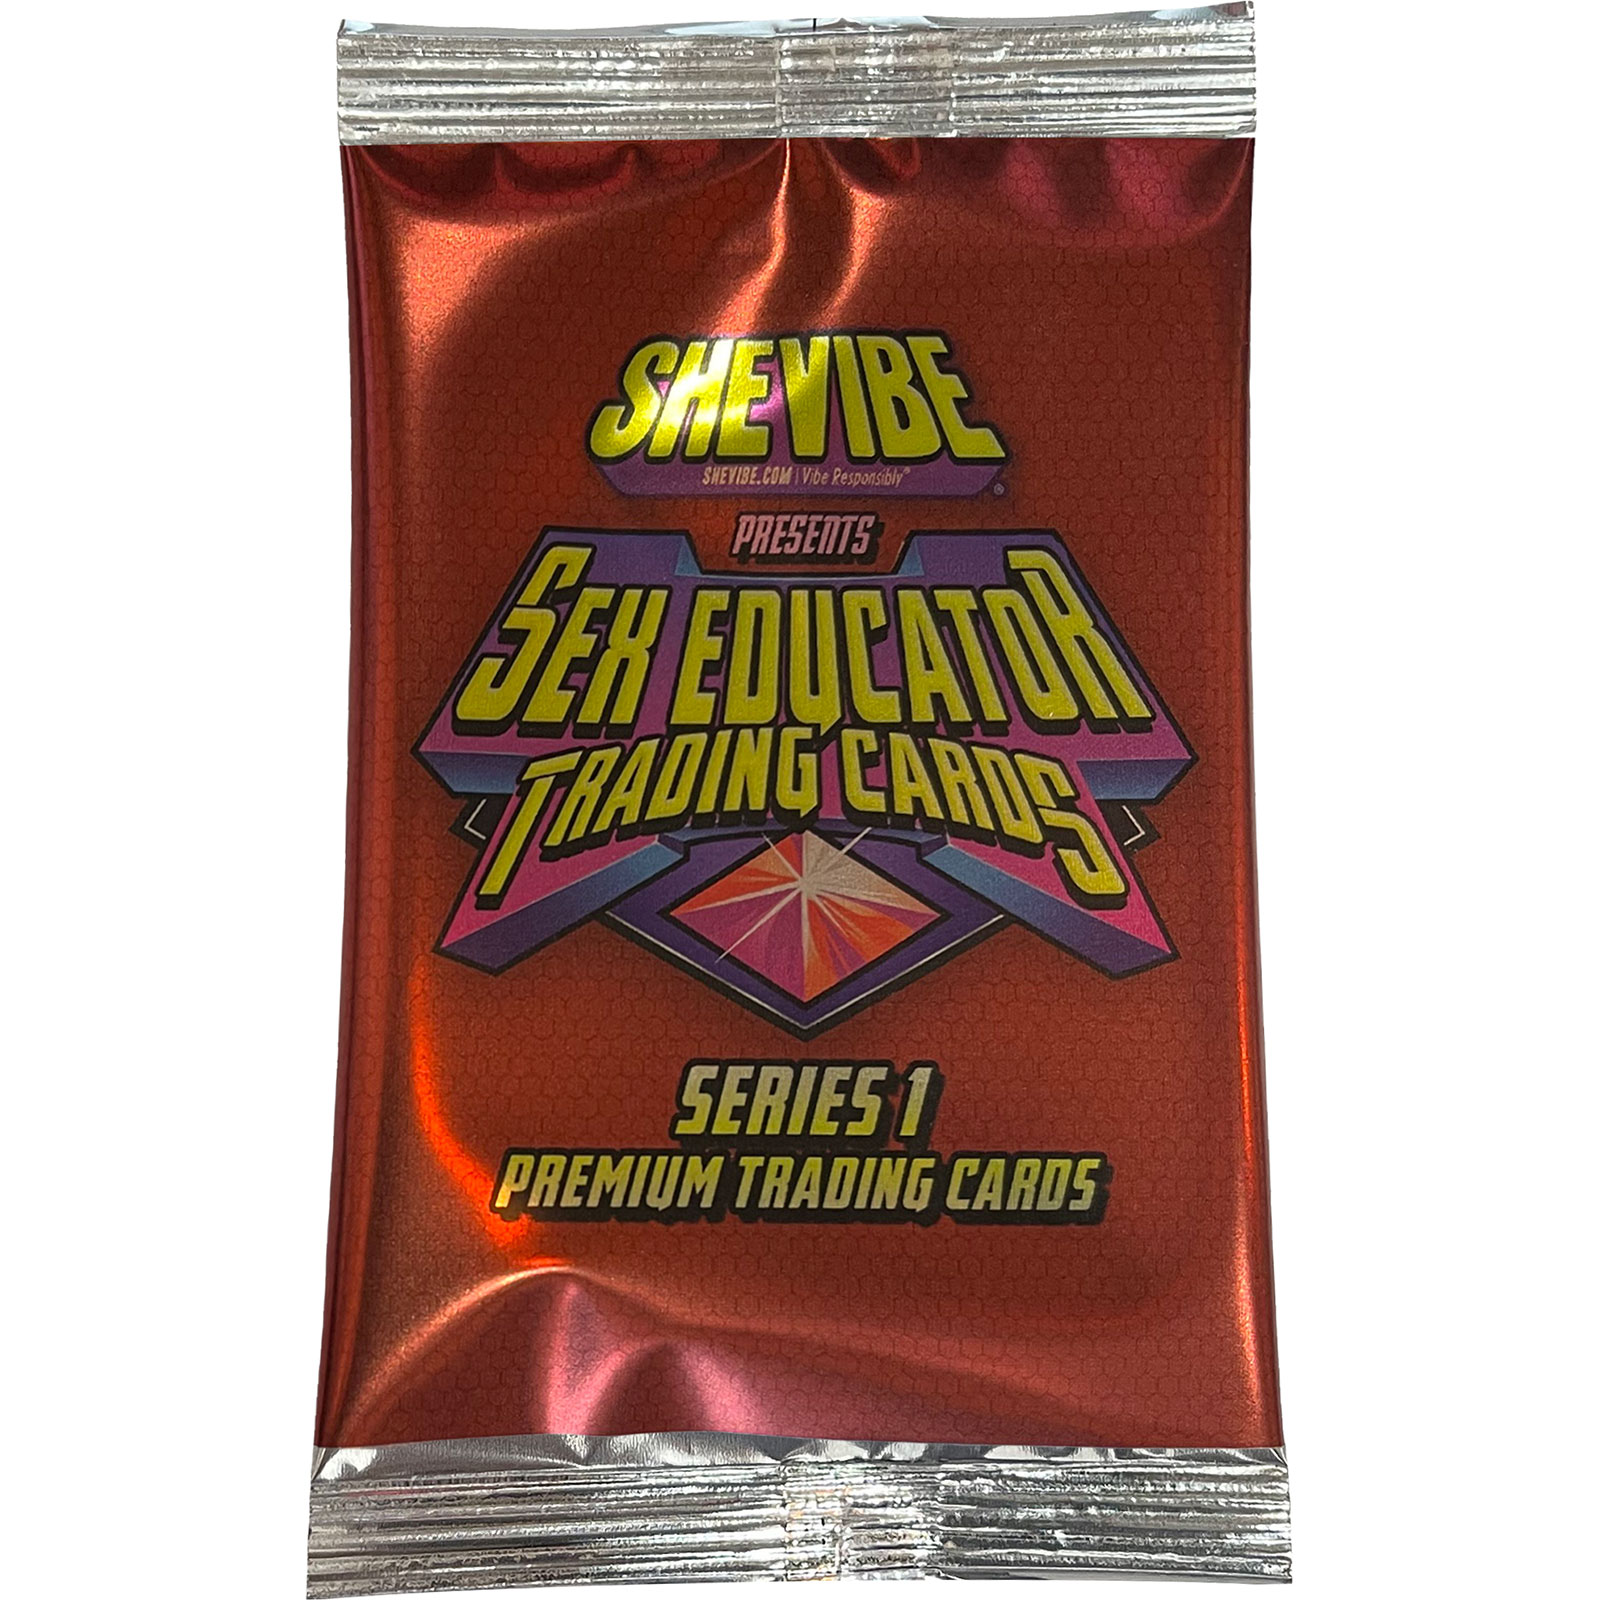 SheVibe Sex Educator Trading Card Set - Series 1 Heroes